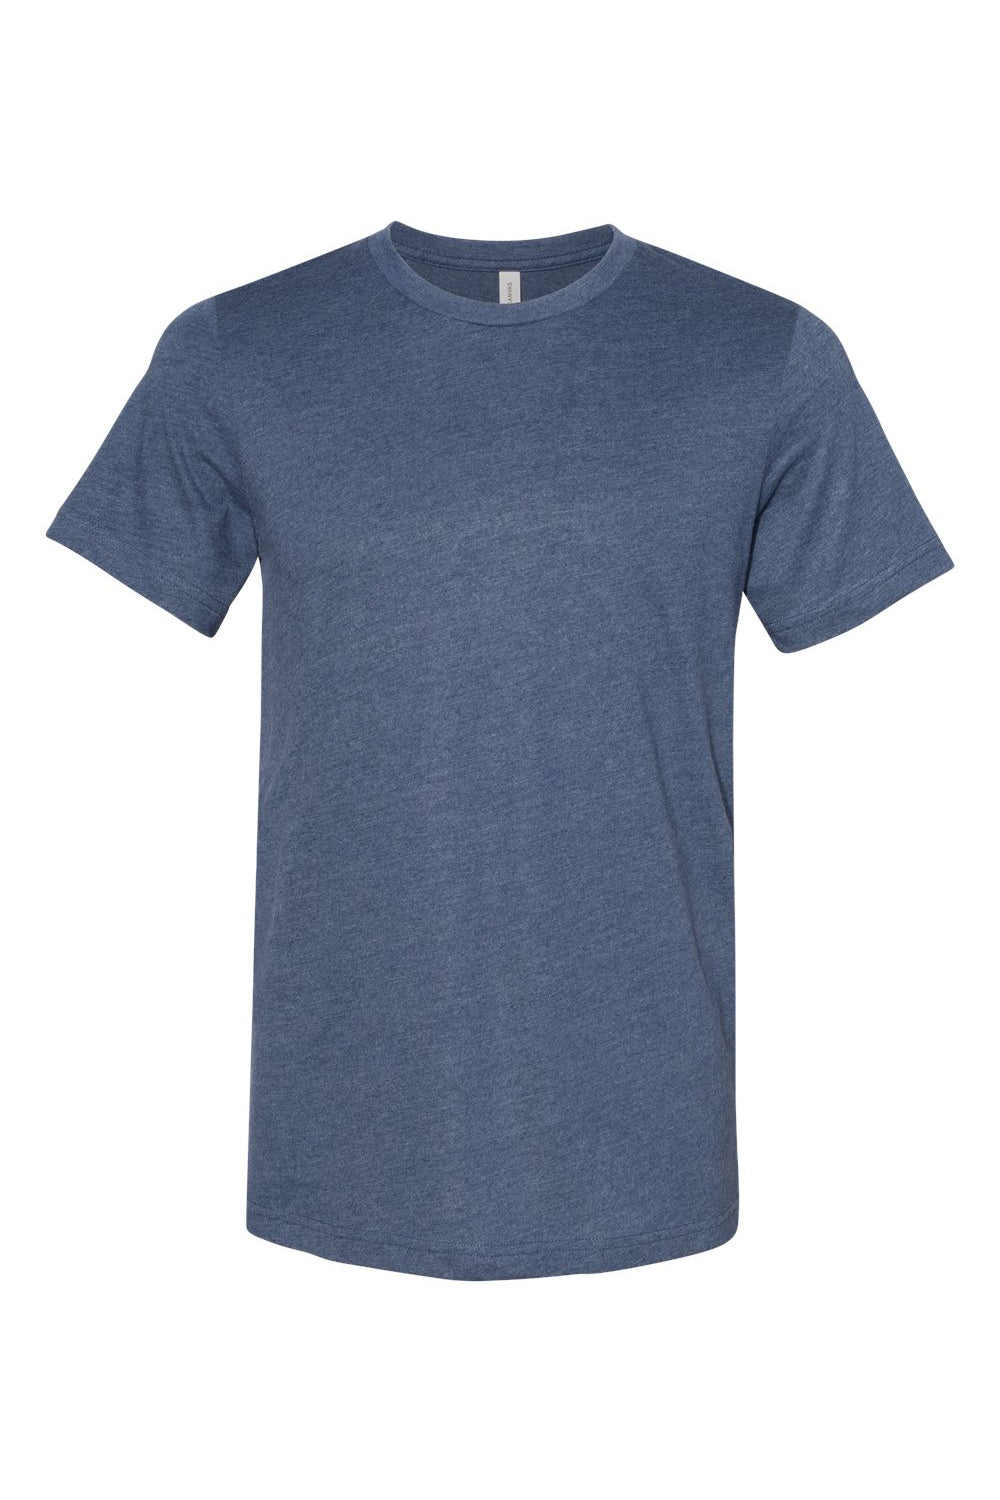 Bella + Canvas BC3301/3301C/3301 Mens Jersey Short Sleeve Crewneck T-Shirt Heather Navy Blue Flat Front